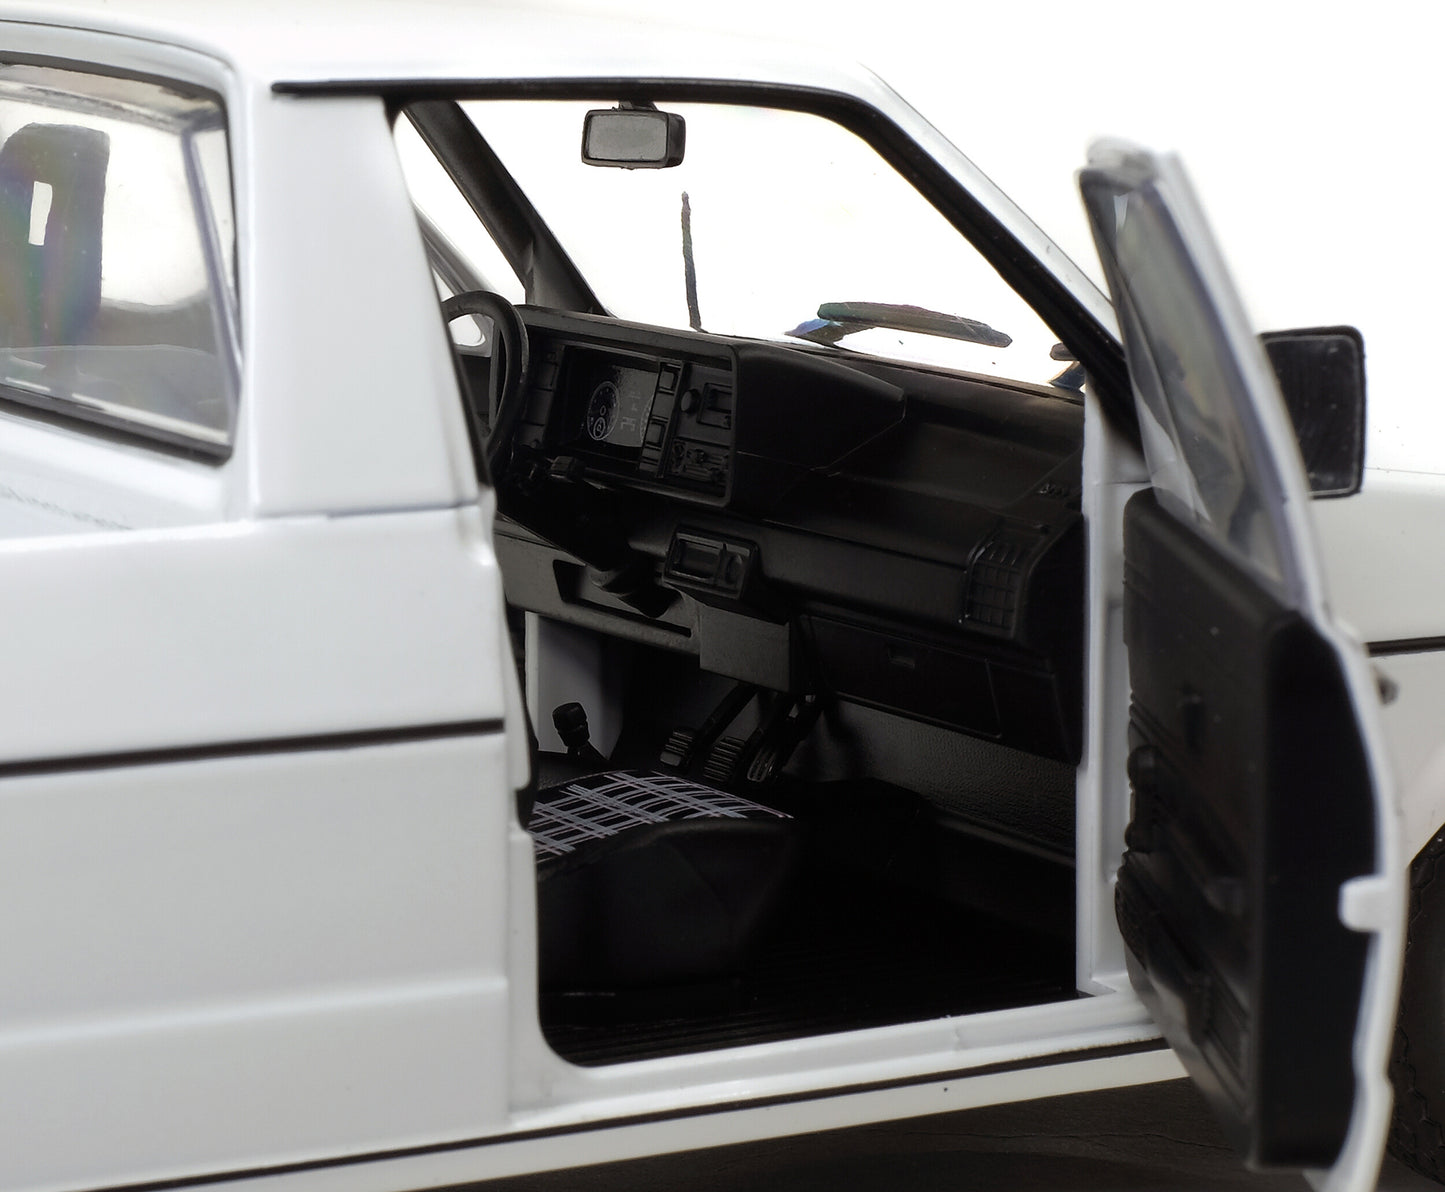 Solido - Volkswagen Caddy (MK1) (Alpine White) 1:18 Scale Model Car